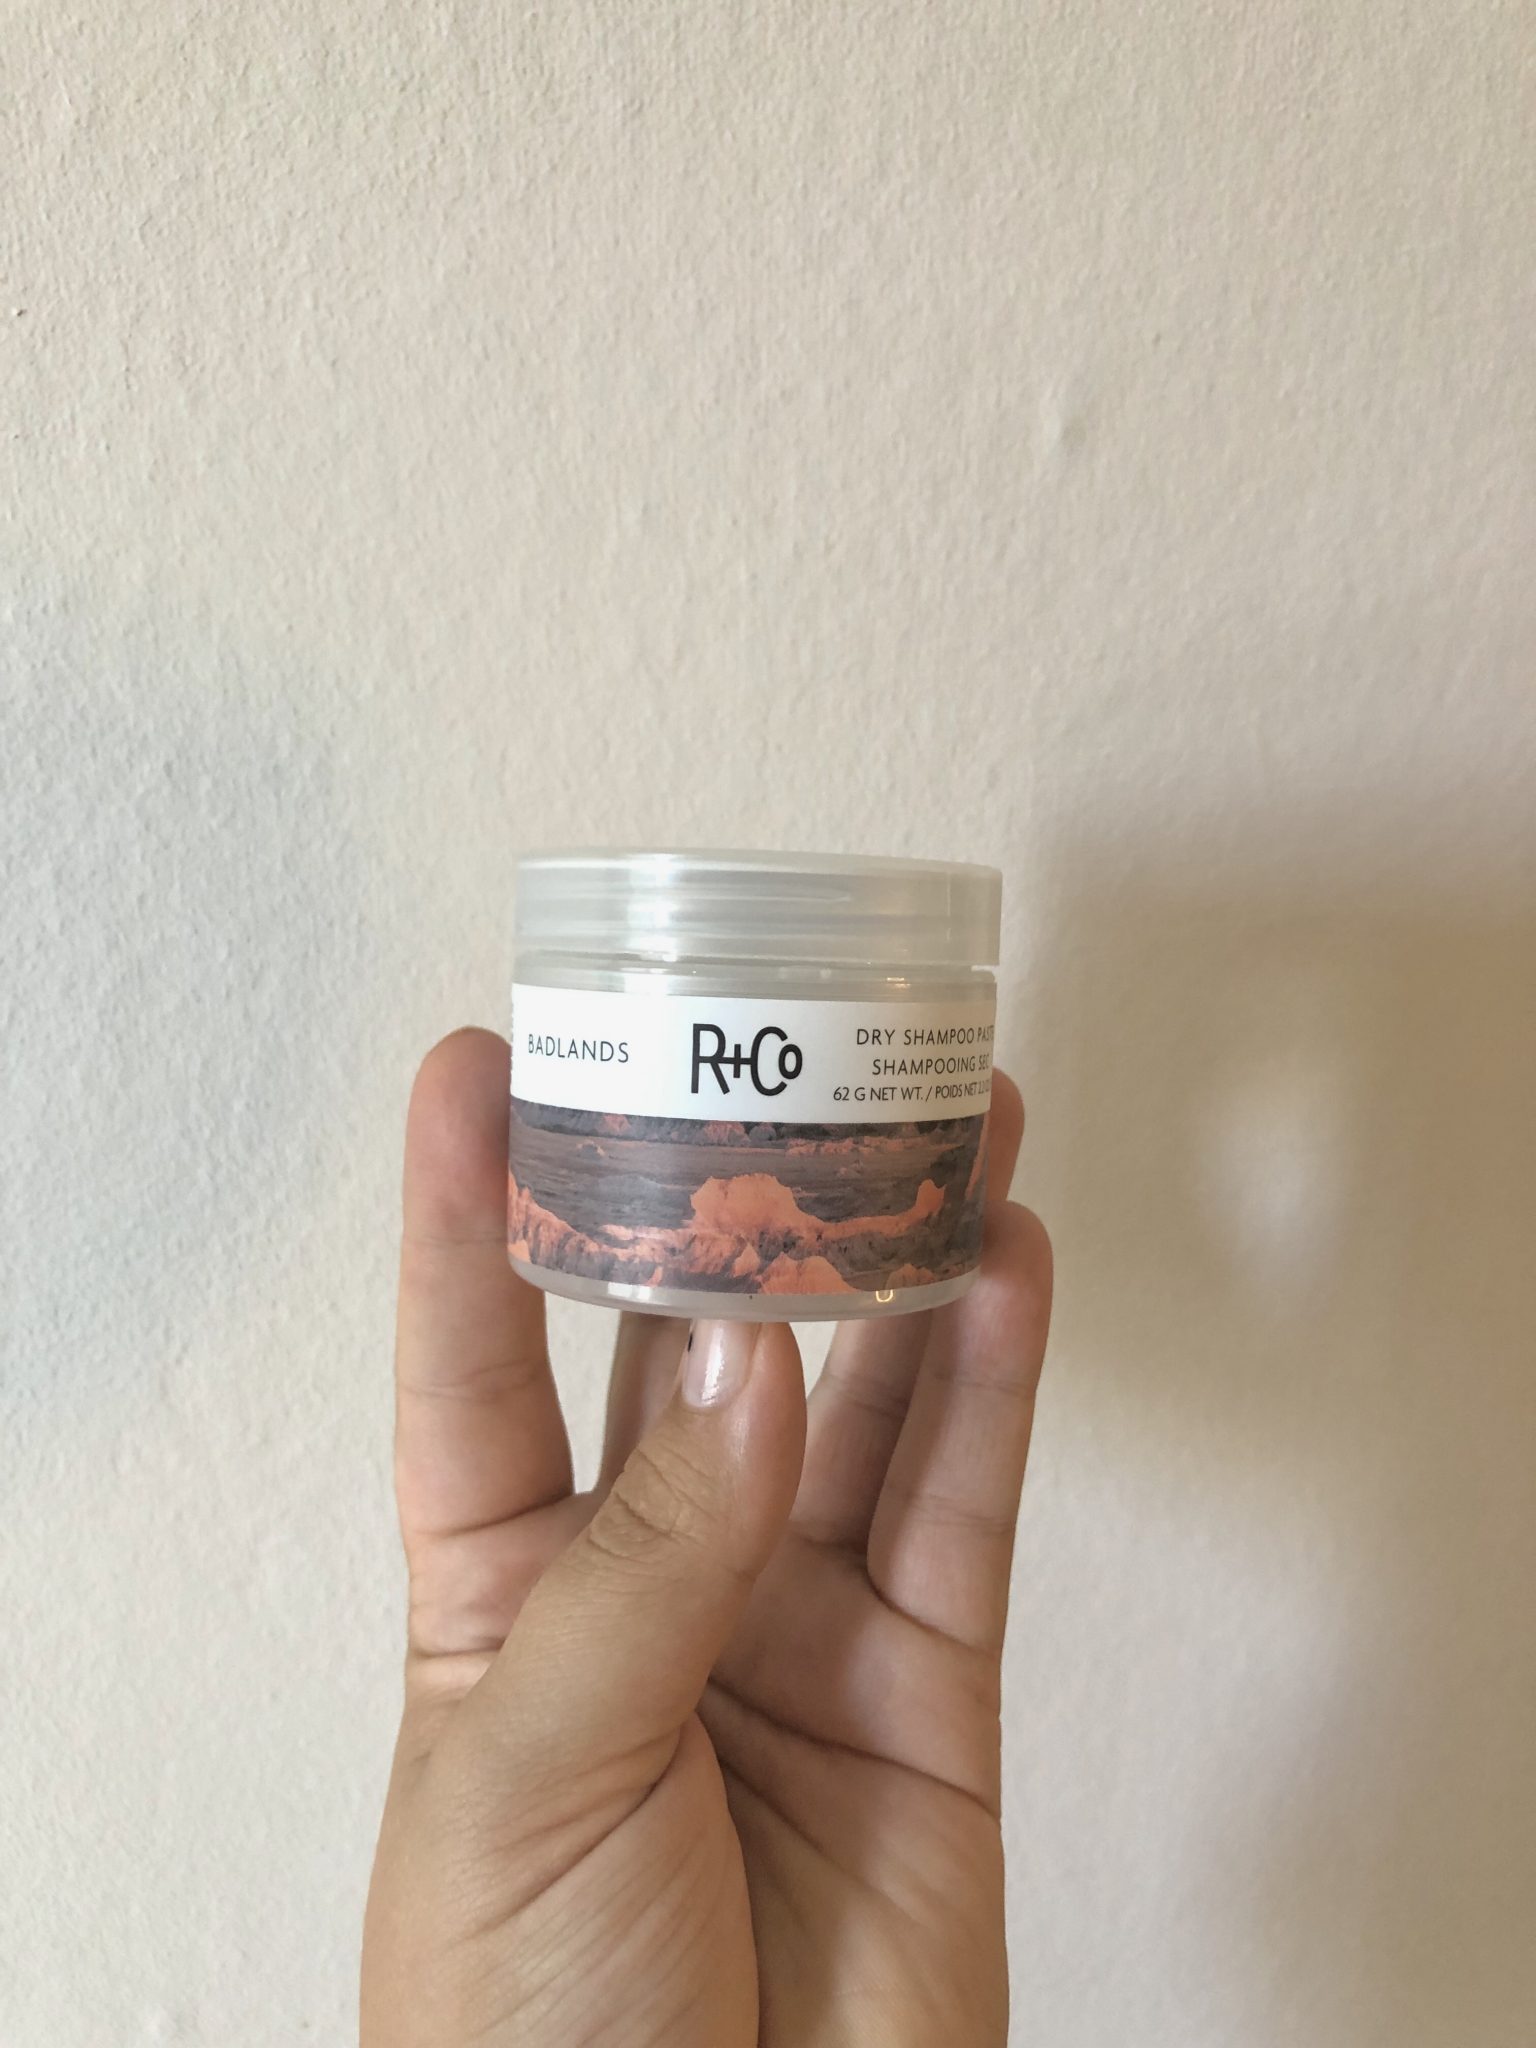 R+Co dry shampoo paste